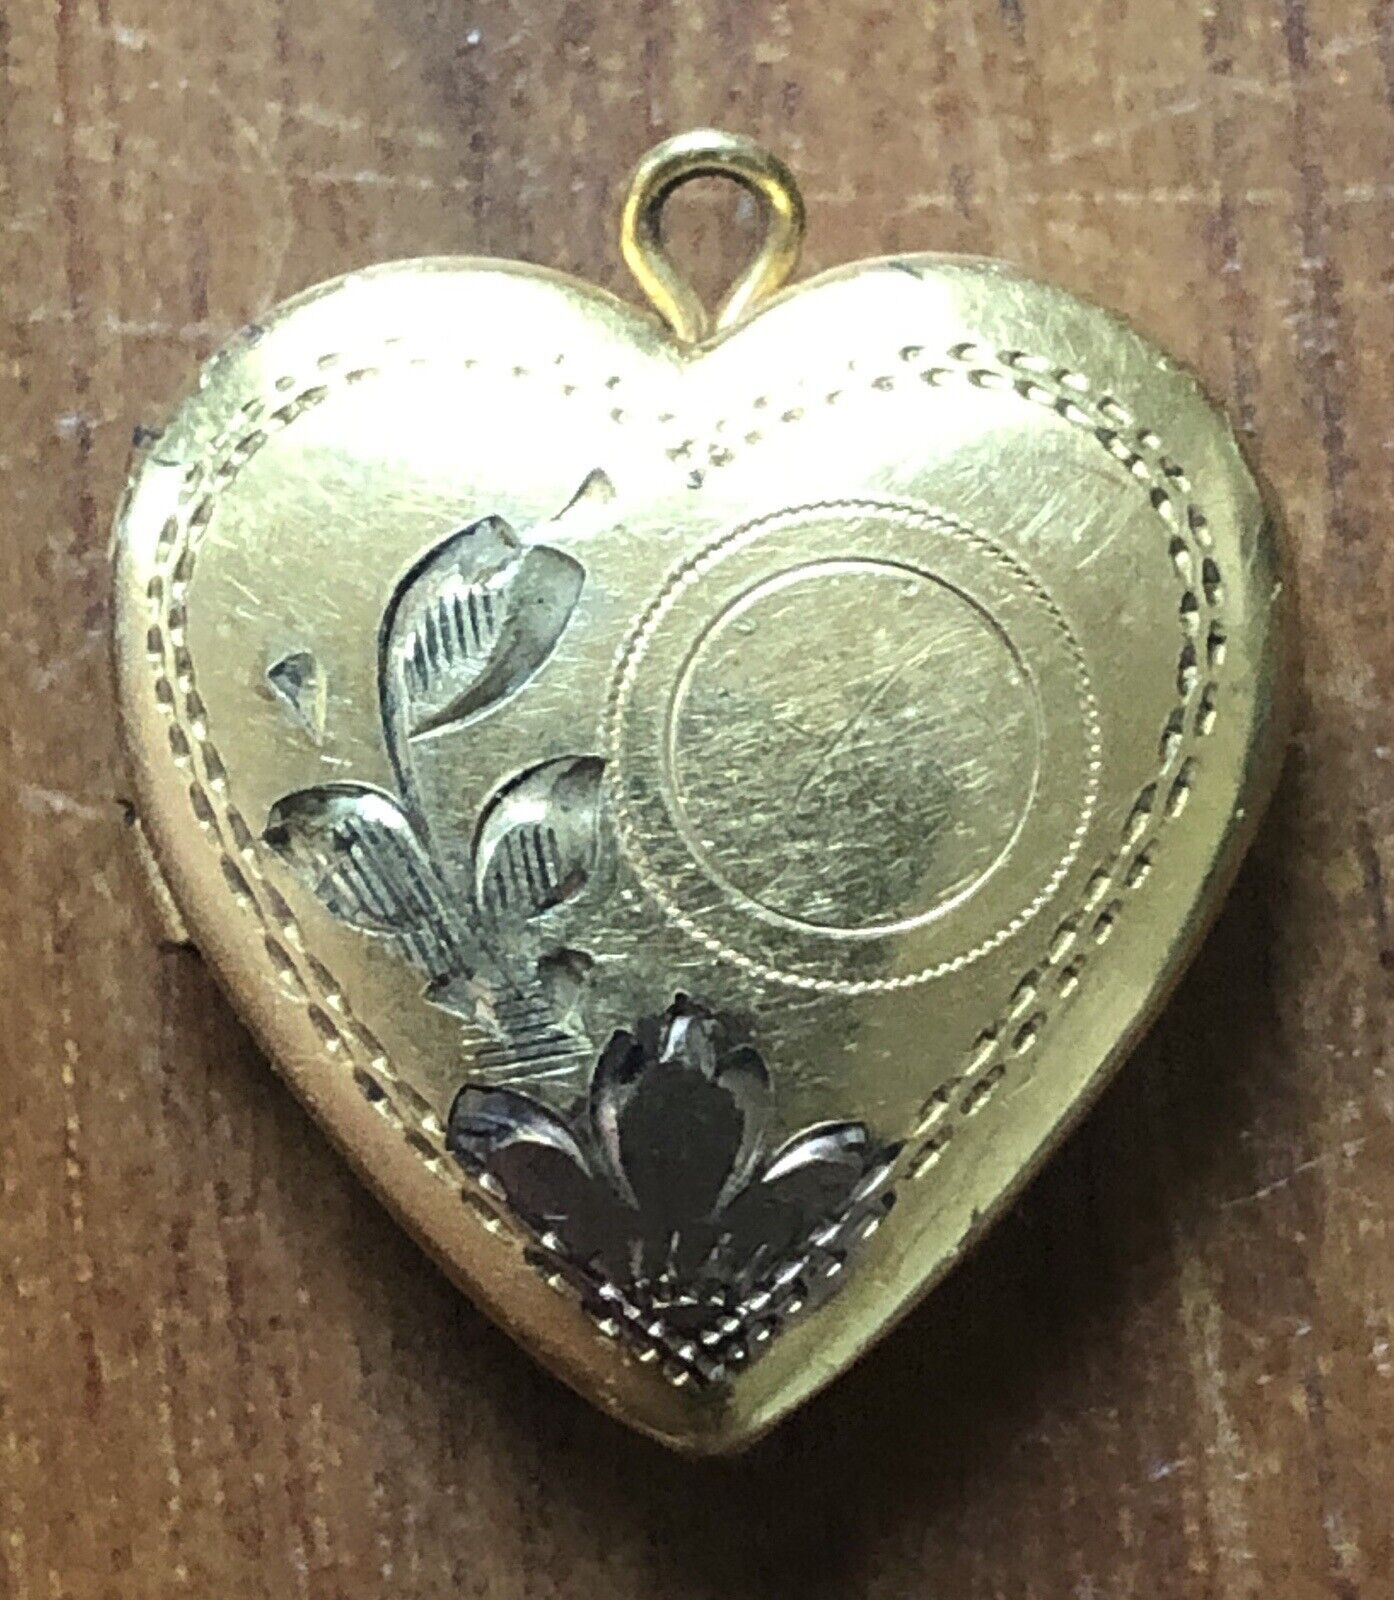 Antique Heart Shaped Locket with Floral Design - image 3